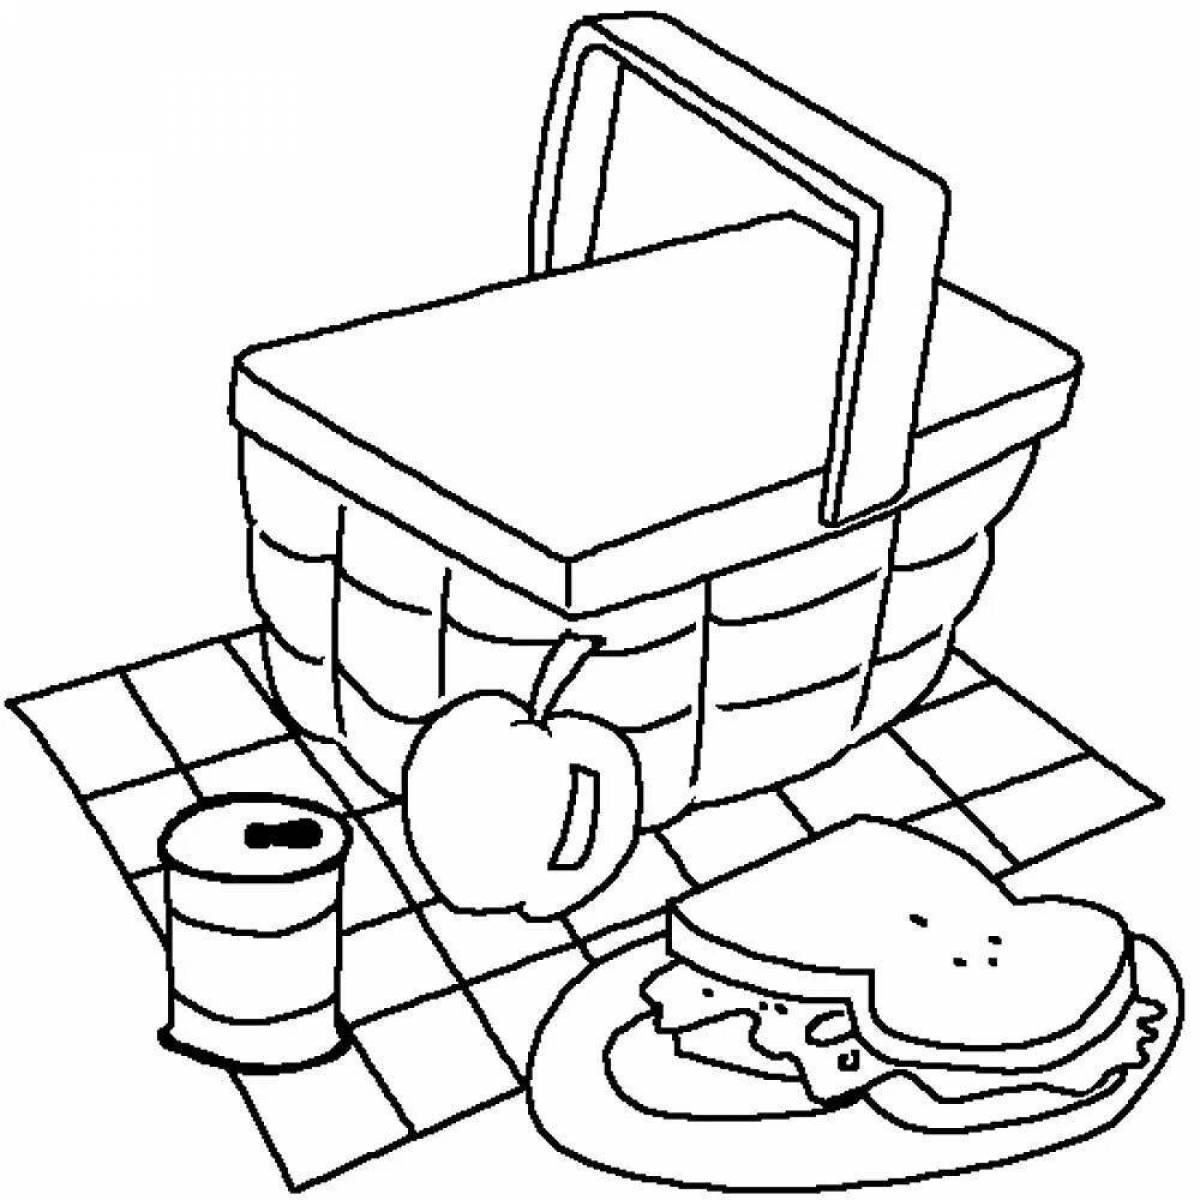 Coloring page happy food basket